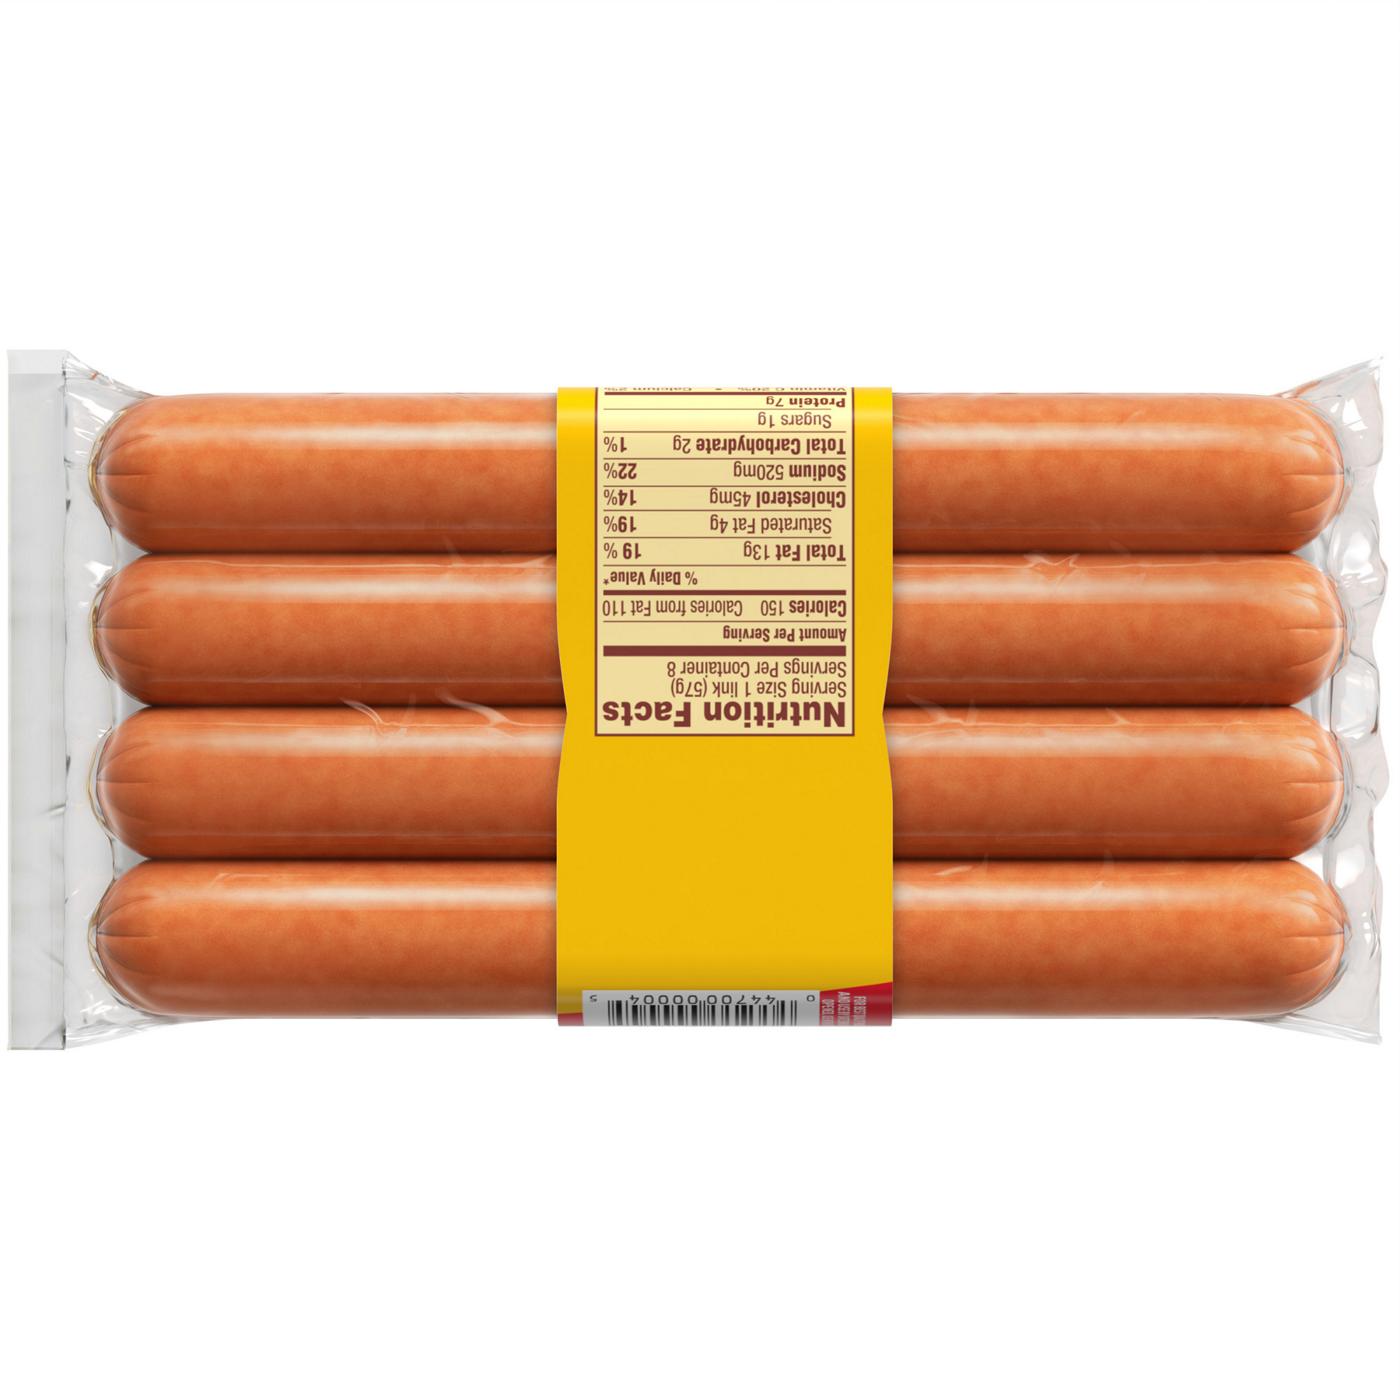 Oscar Mayer Bun Length Uncured Wieners Hot Dogs; image 6 of 6